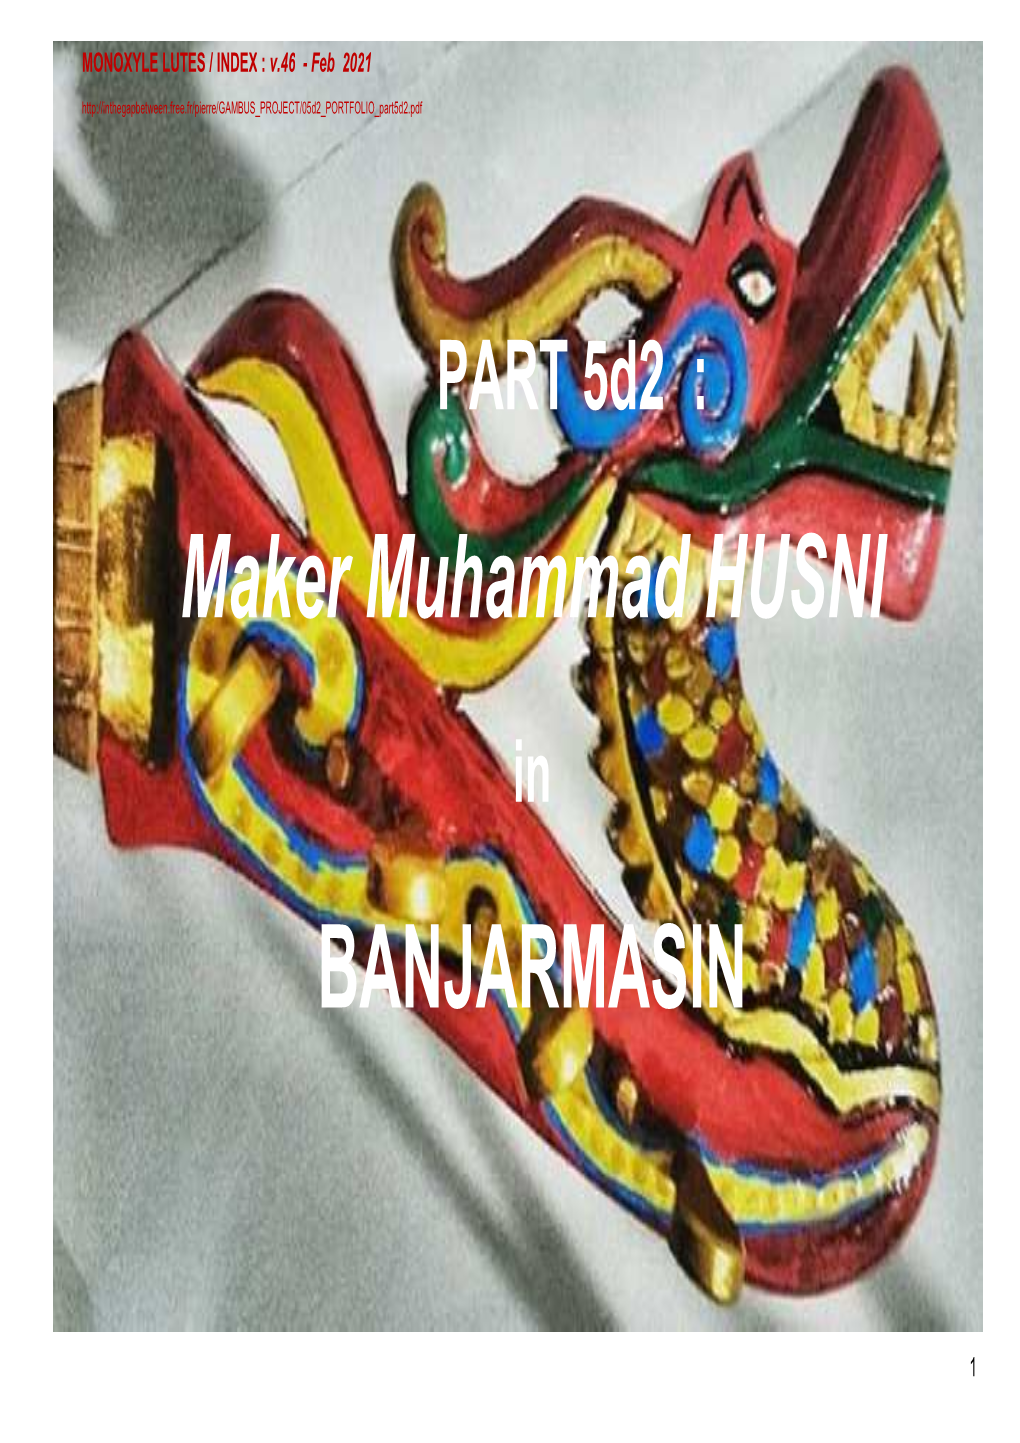 Maker Muhammad HUSNI BANJARMASIN